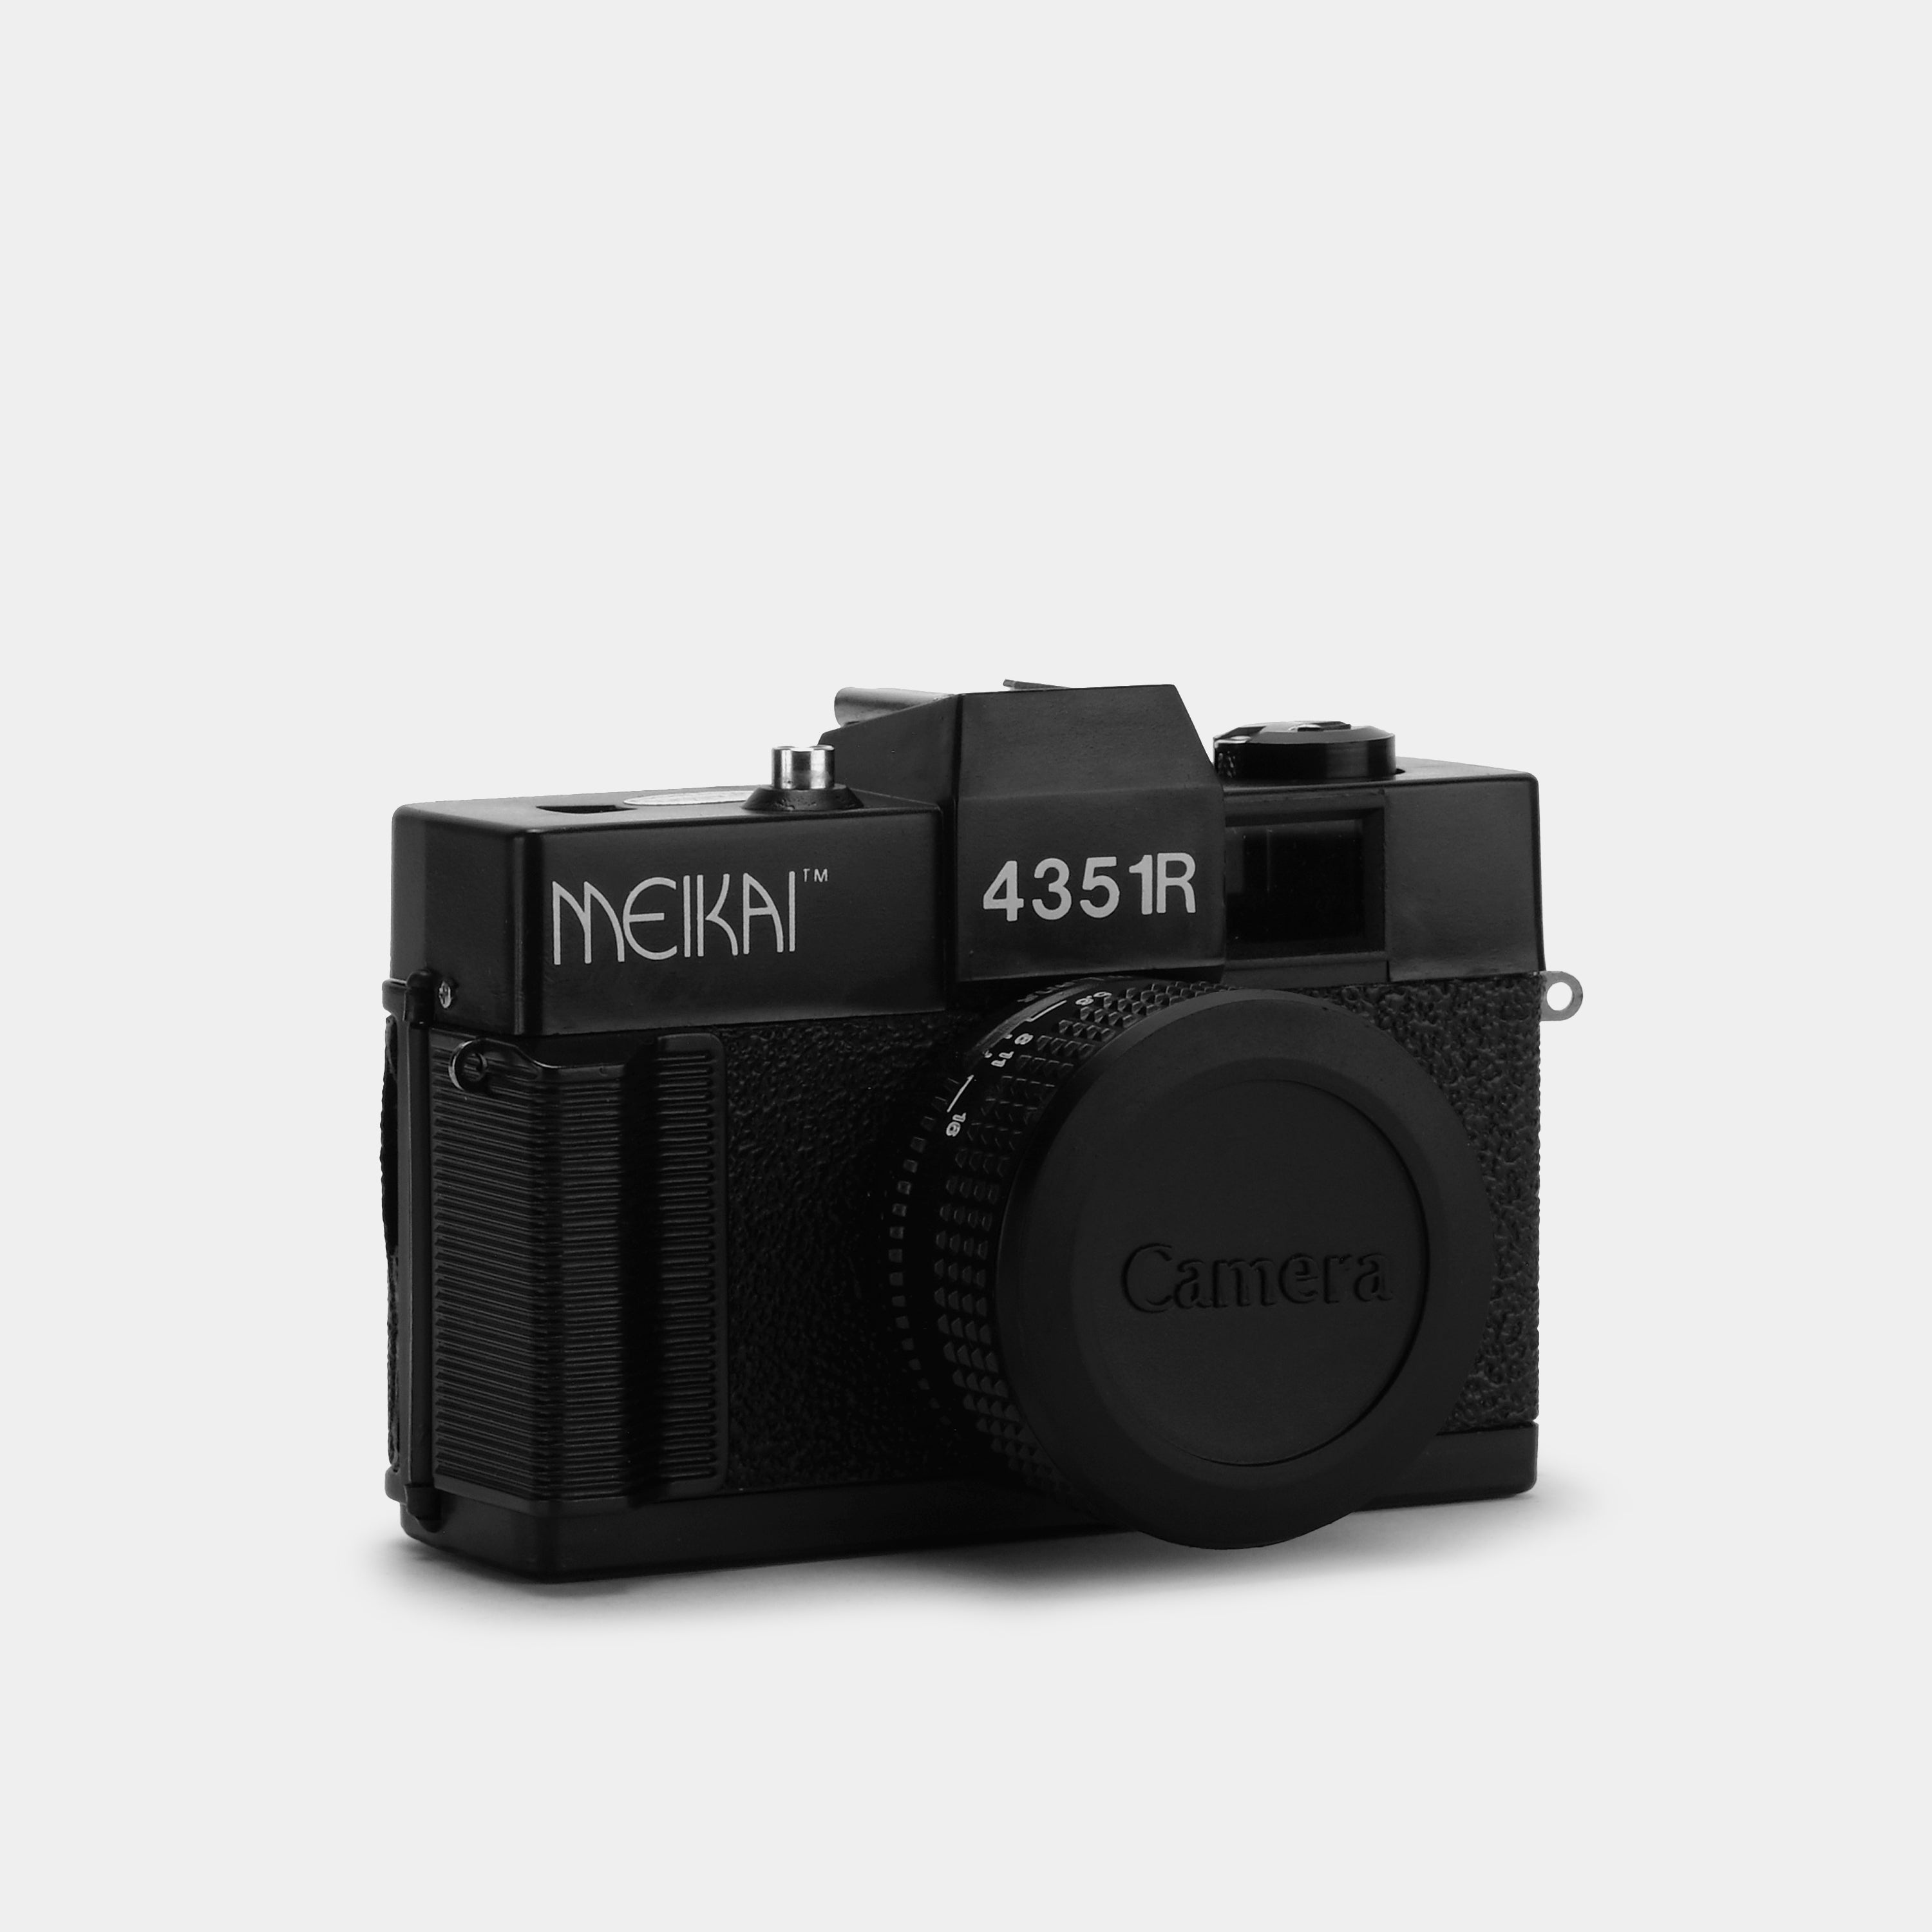 MeiKai 4351R 35mm Point and Shoot Film Camera